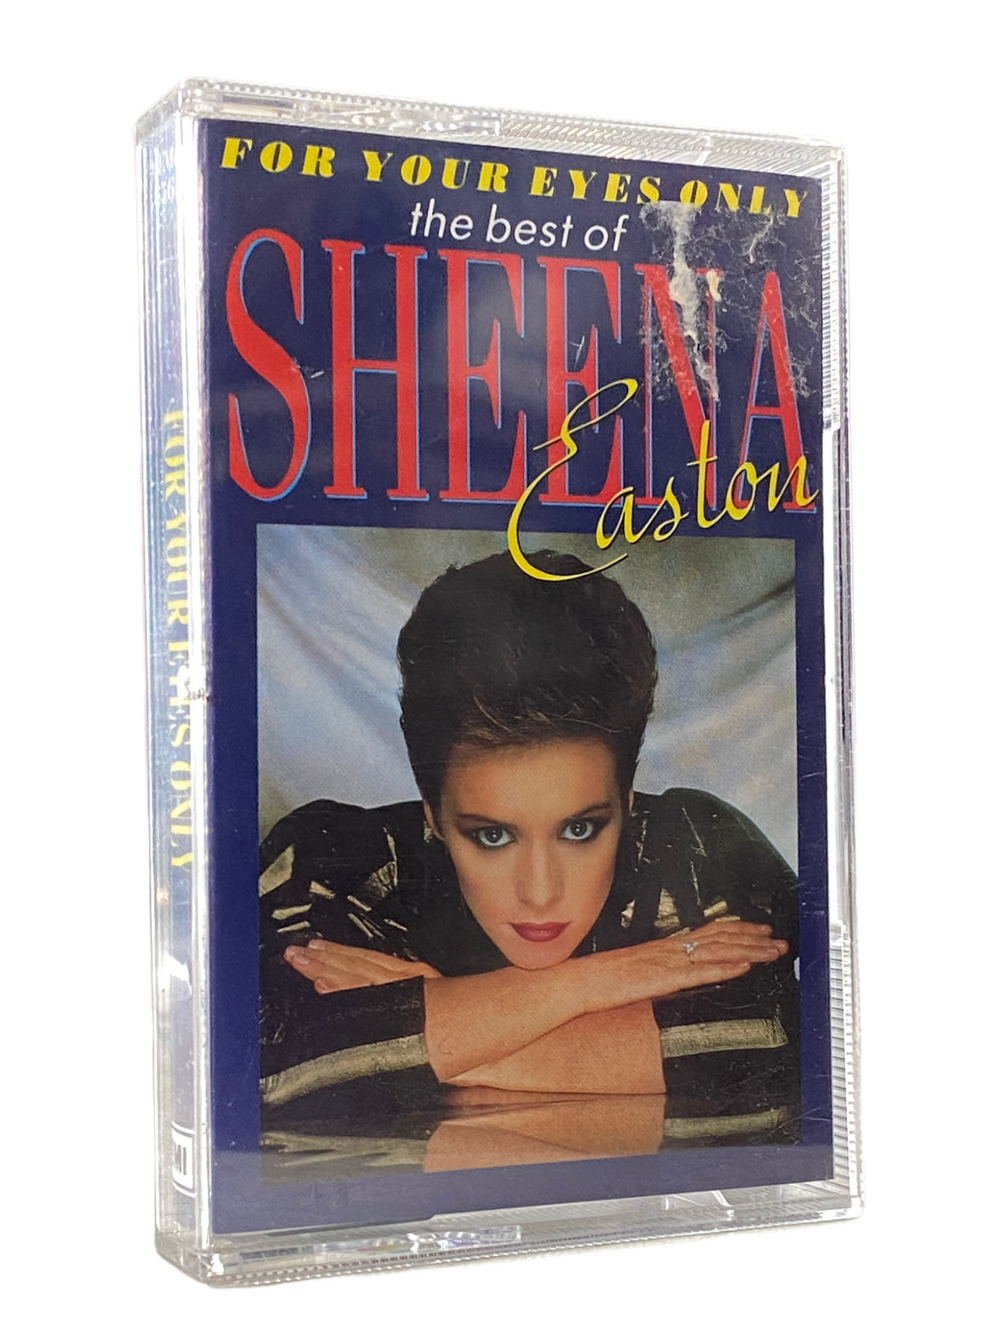 Prince – Sheena Easton The Best Of Original Cassette Tape UK 1989 Release Prince